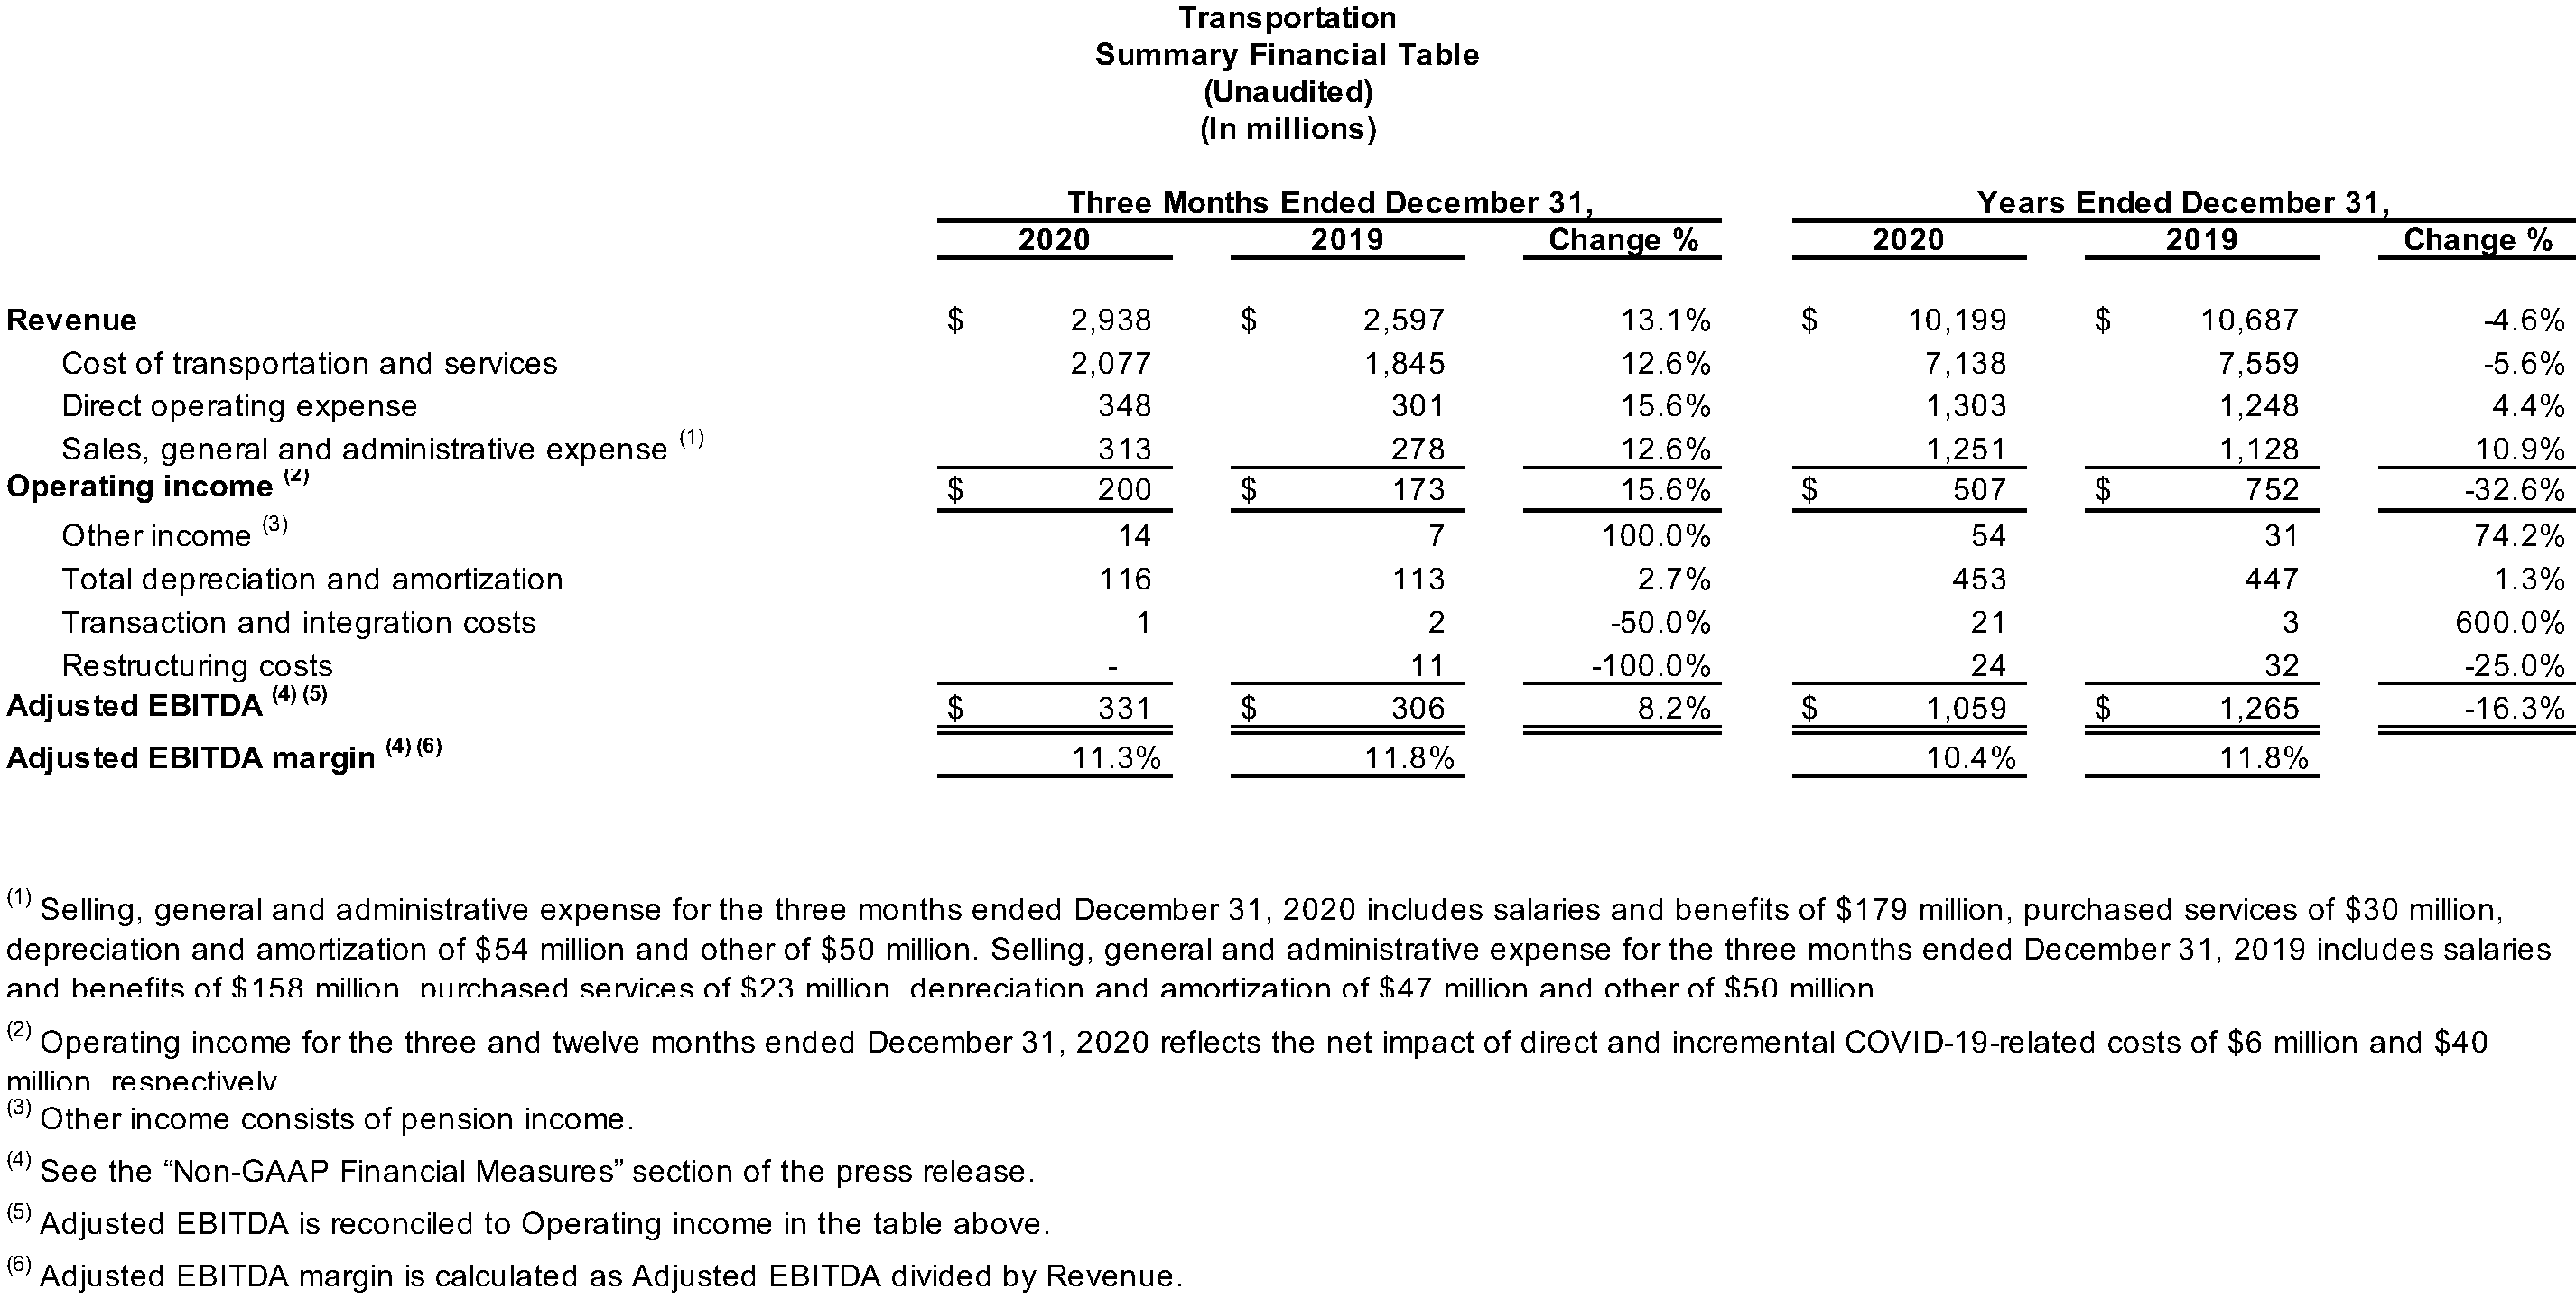 Transportation Summary Financial Table (Unaudited)